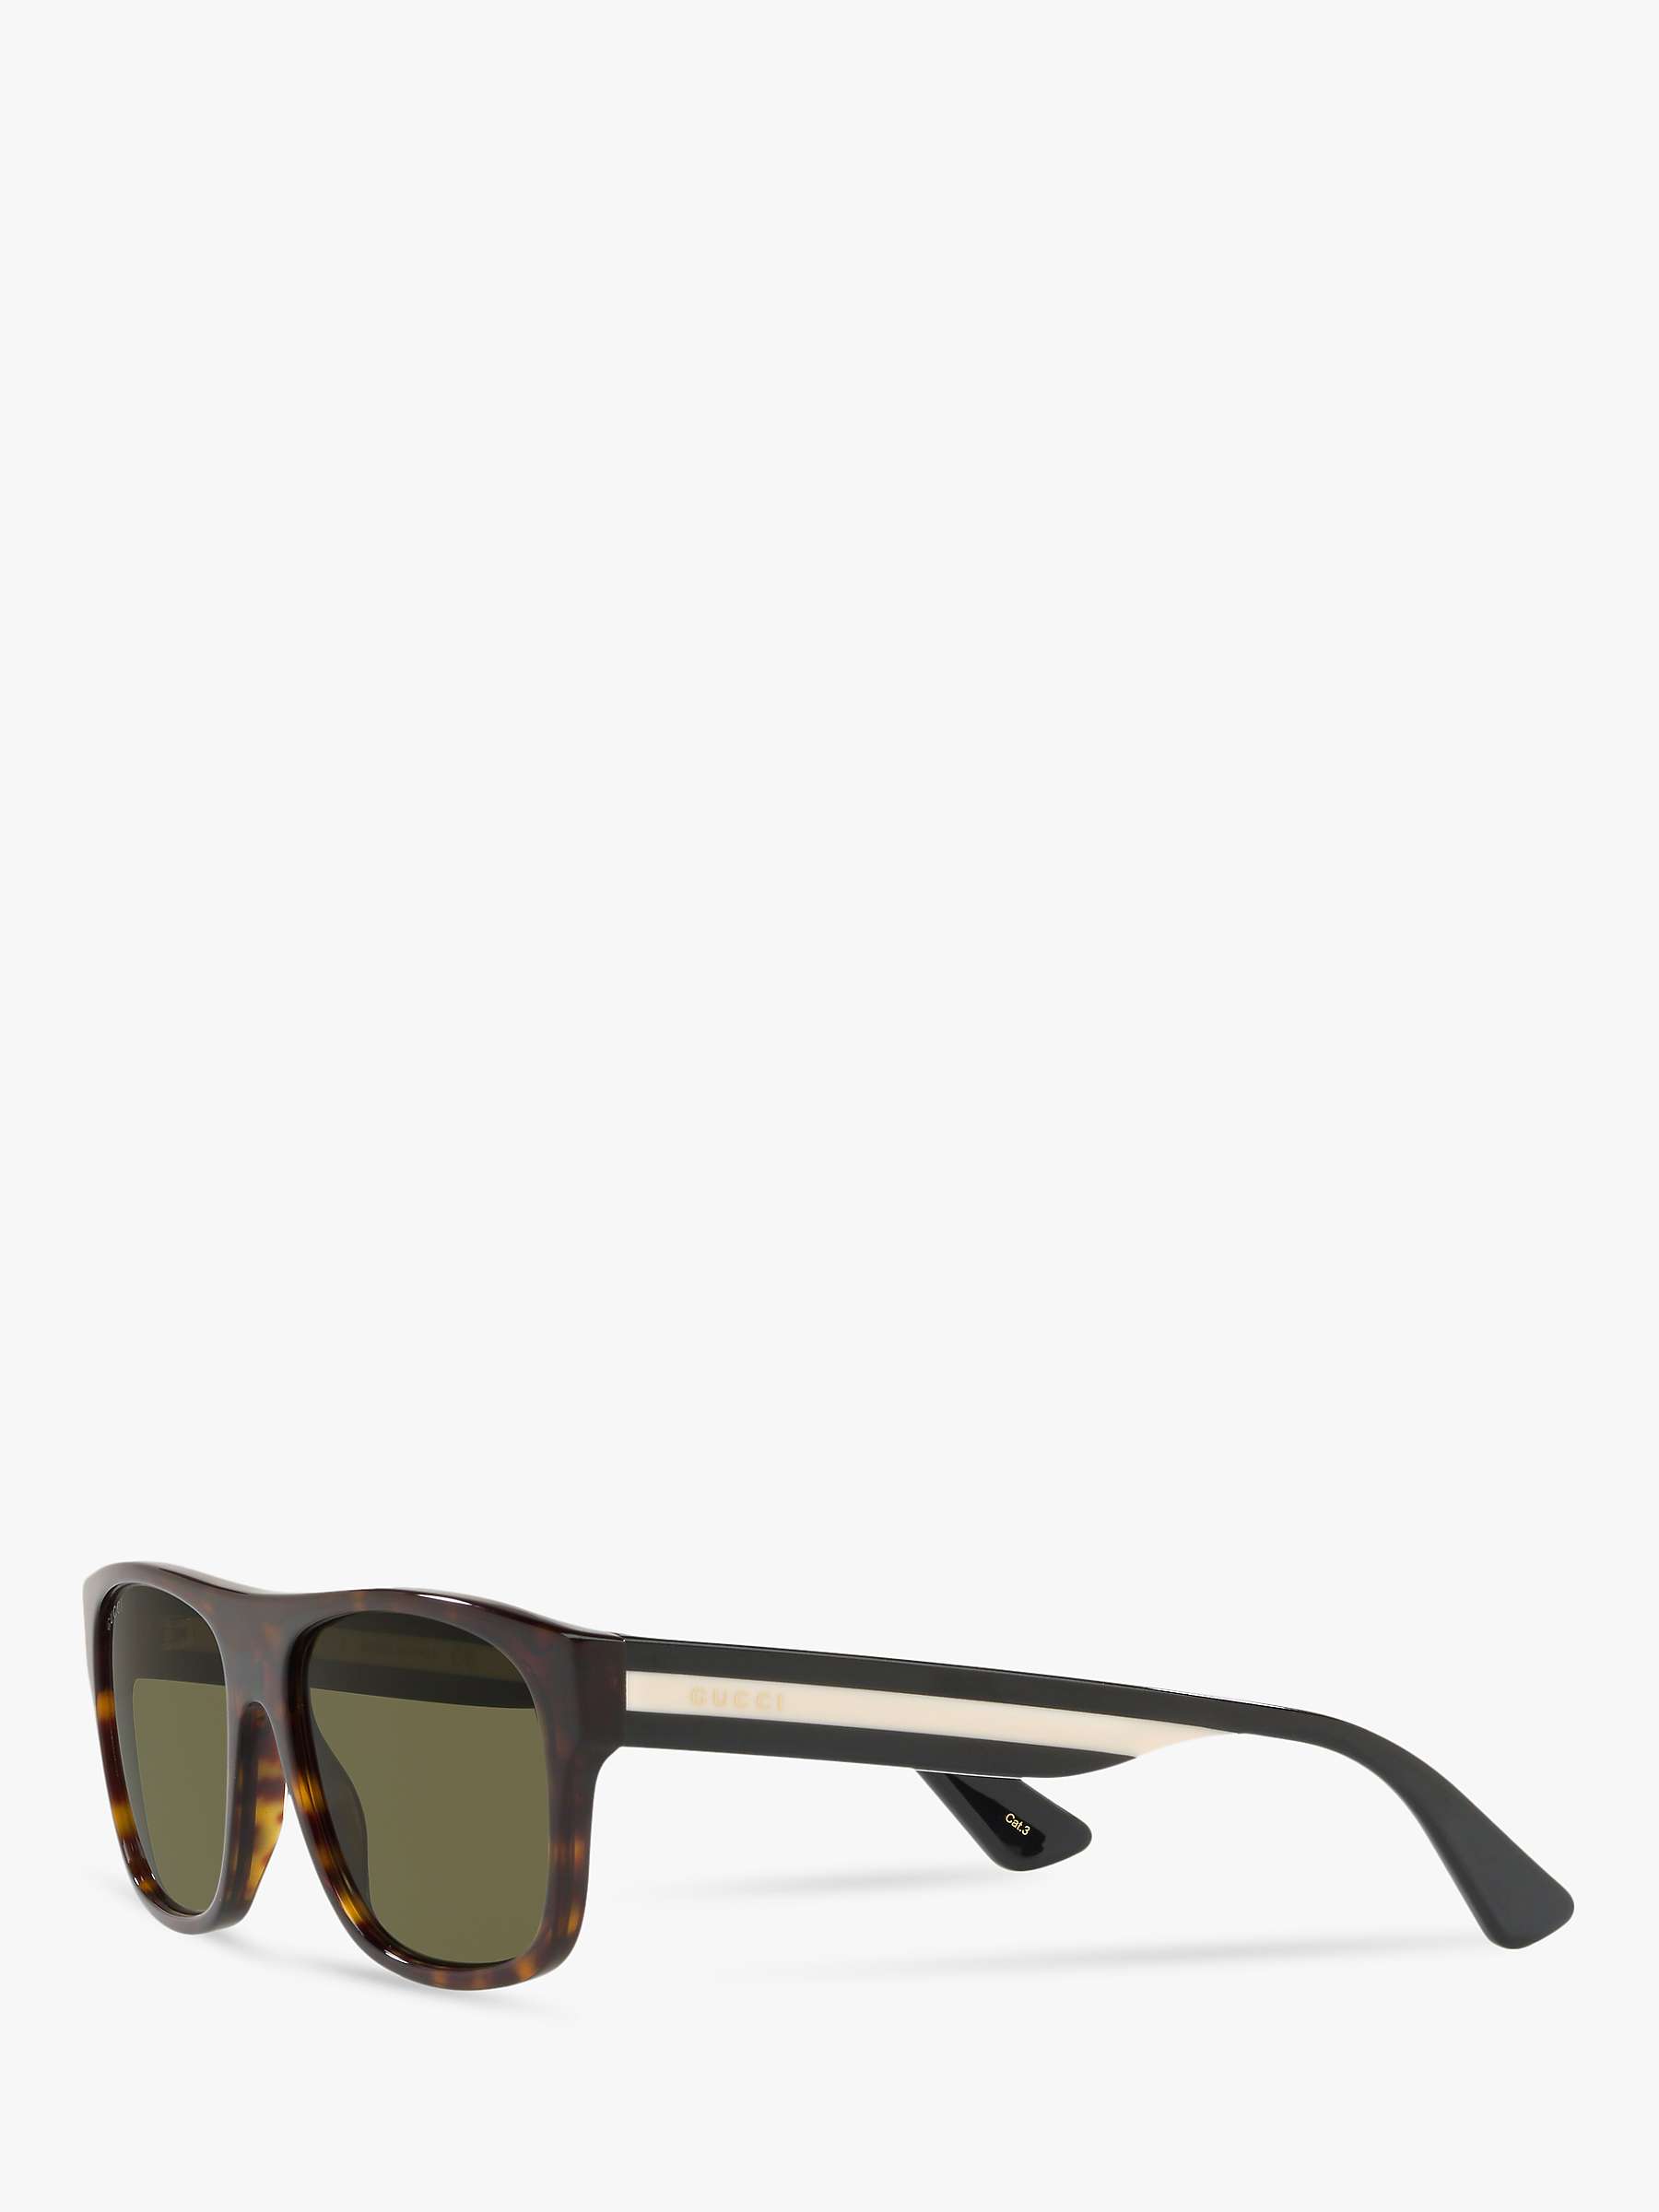 Buy Gucci GG0341S Men's Rectangular Sunglasses Online at johnlewis.com